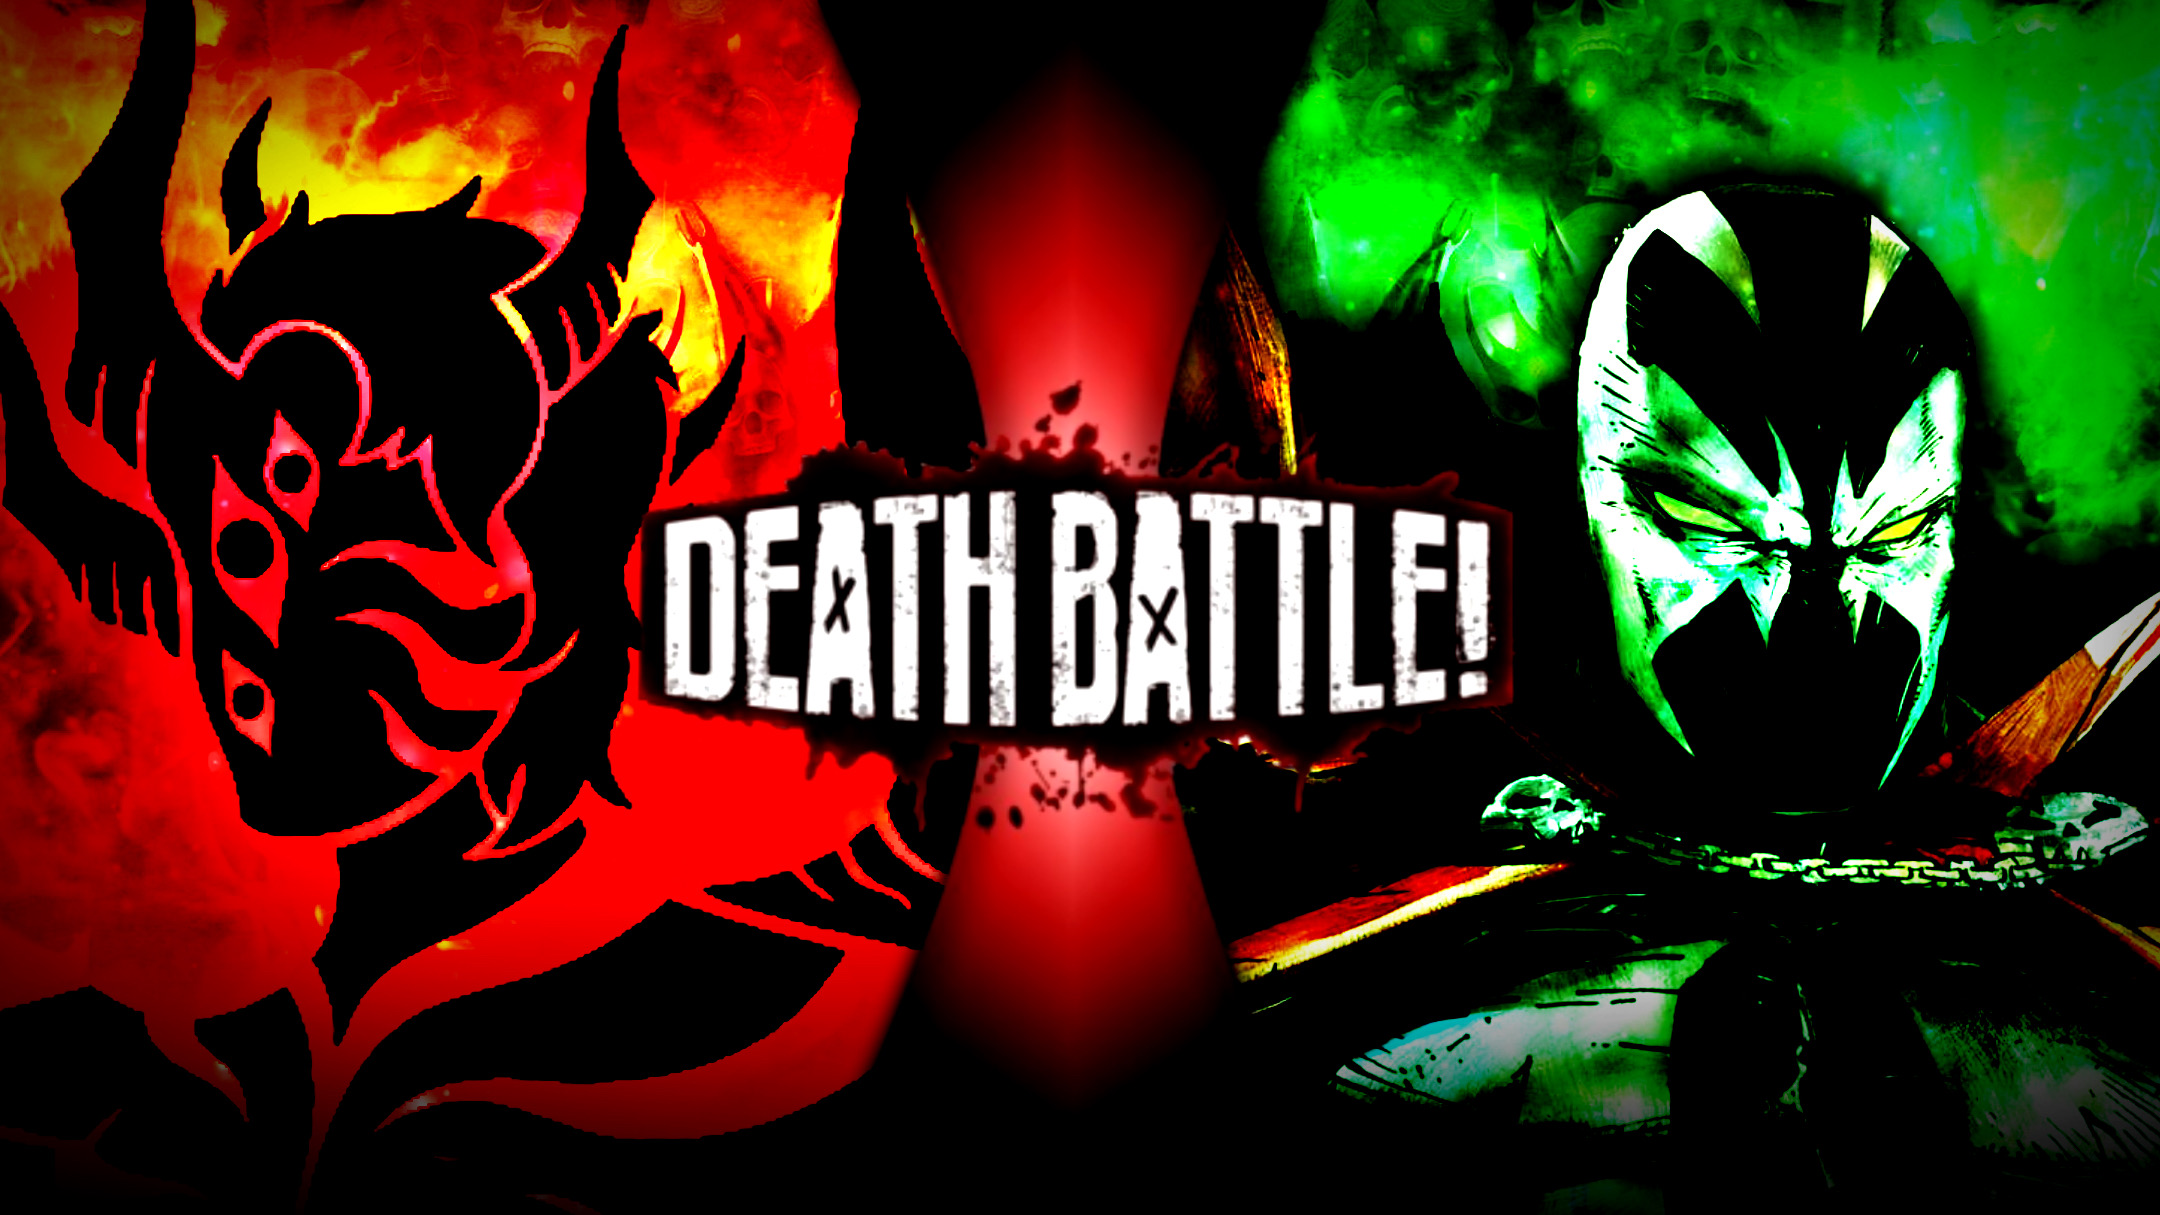 Dante (DmC) vs Spawn (First Age) - Battles - Comic Vine